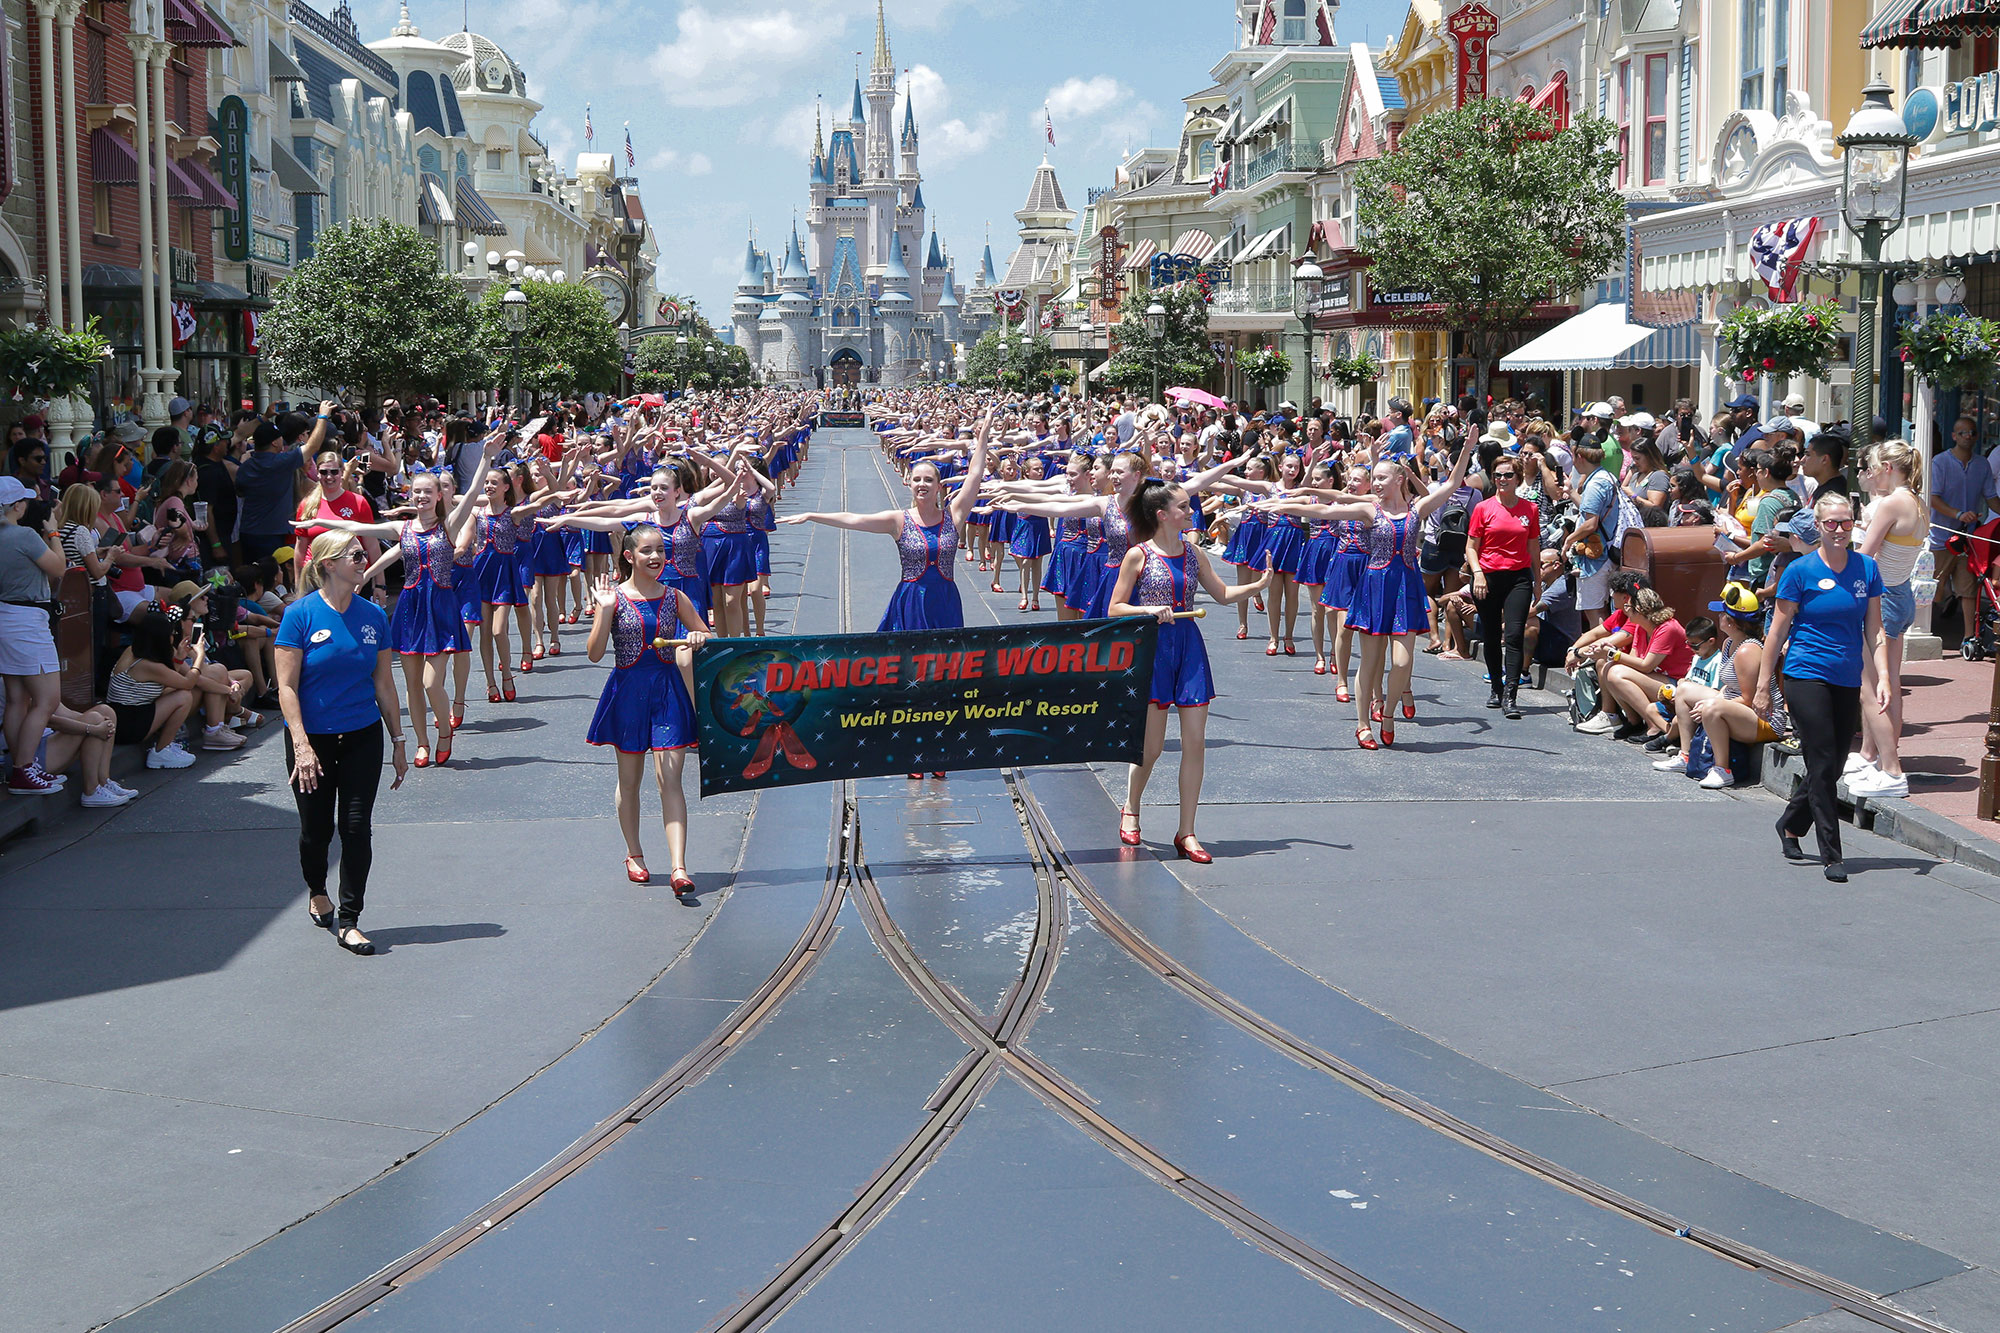 Walt Disney World Dance The World World Class Vacations